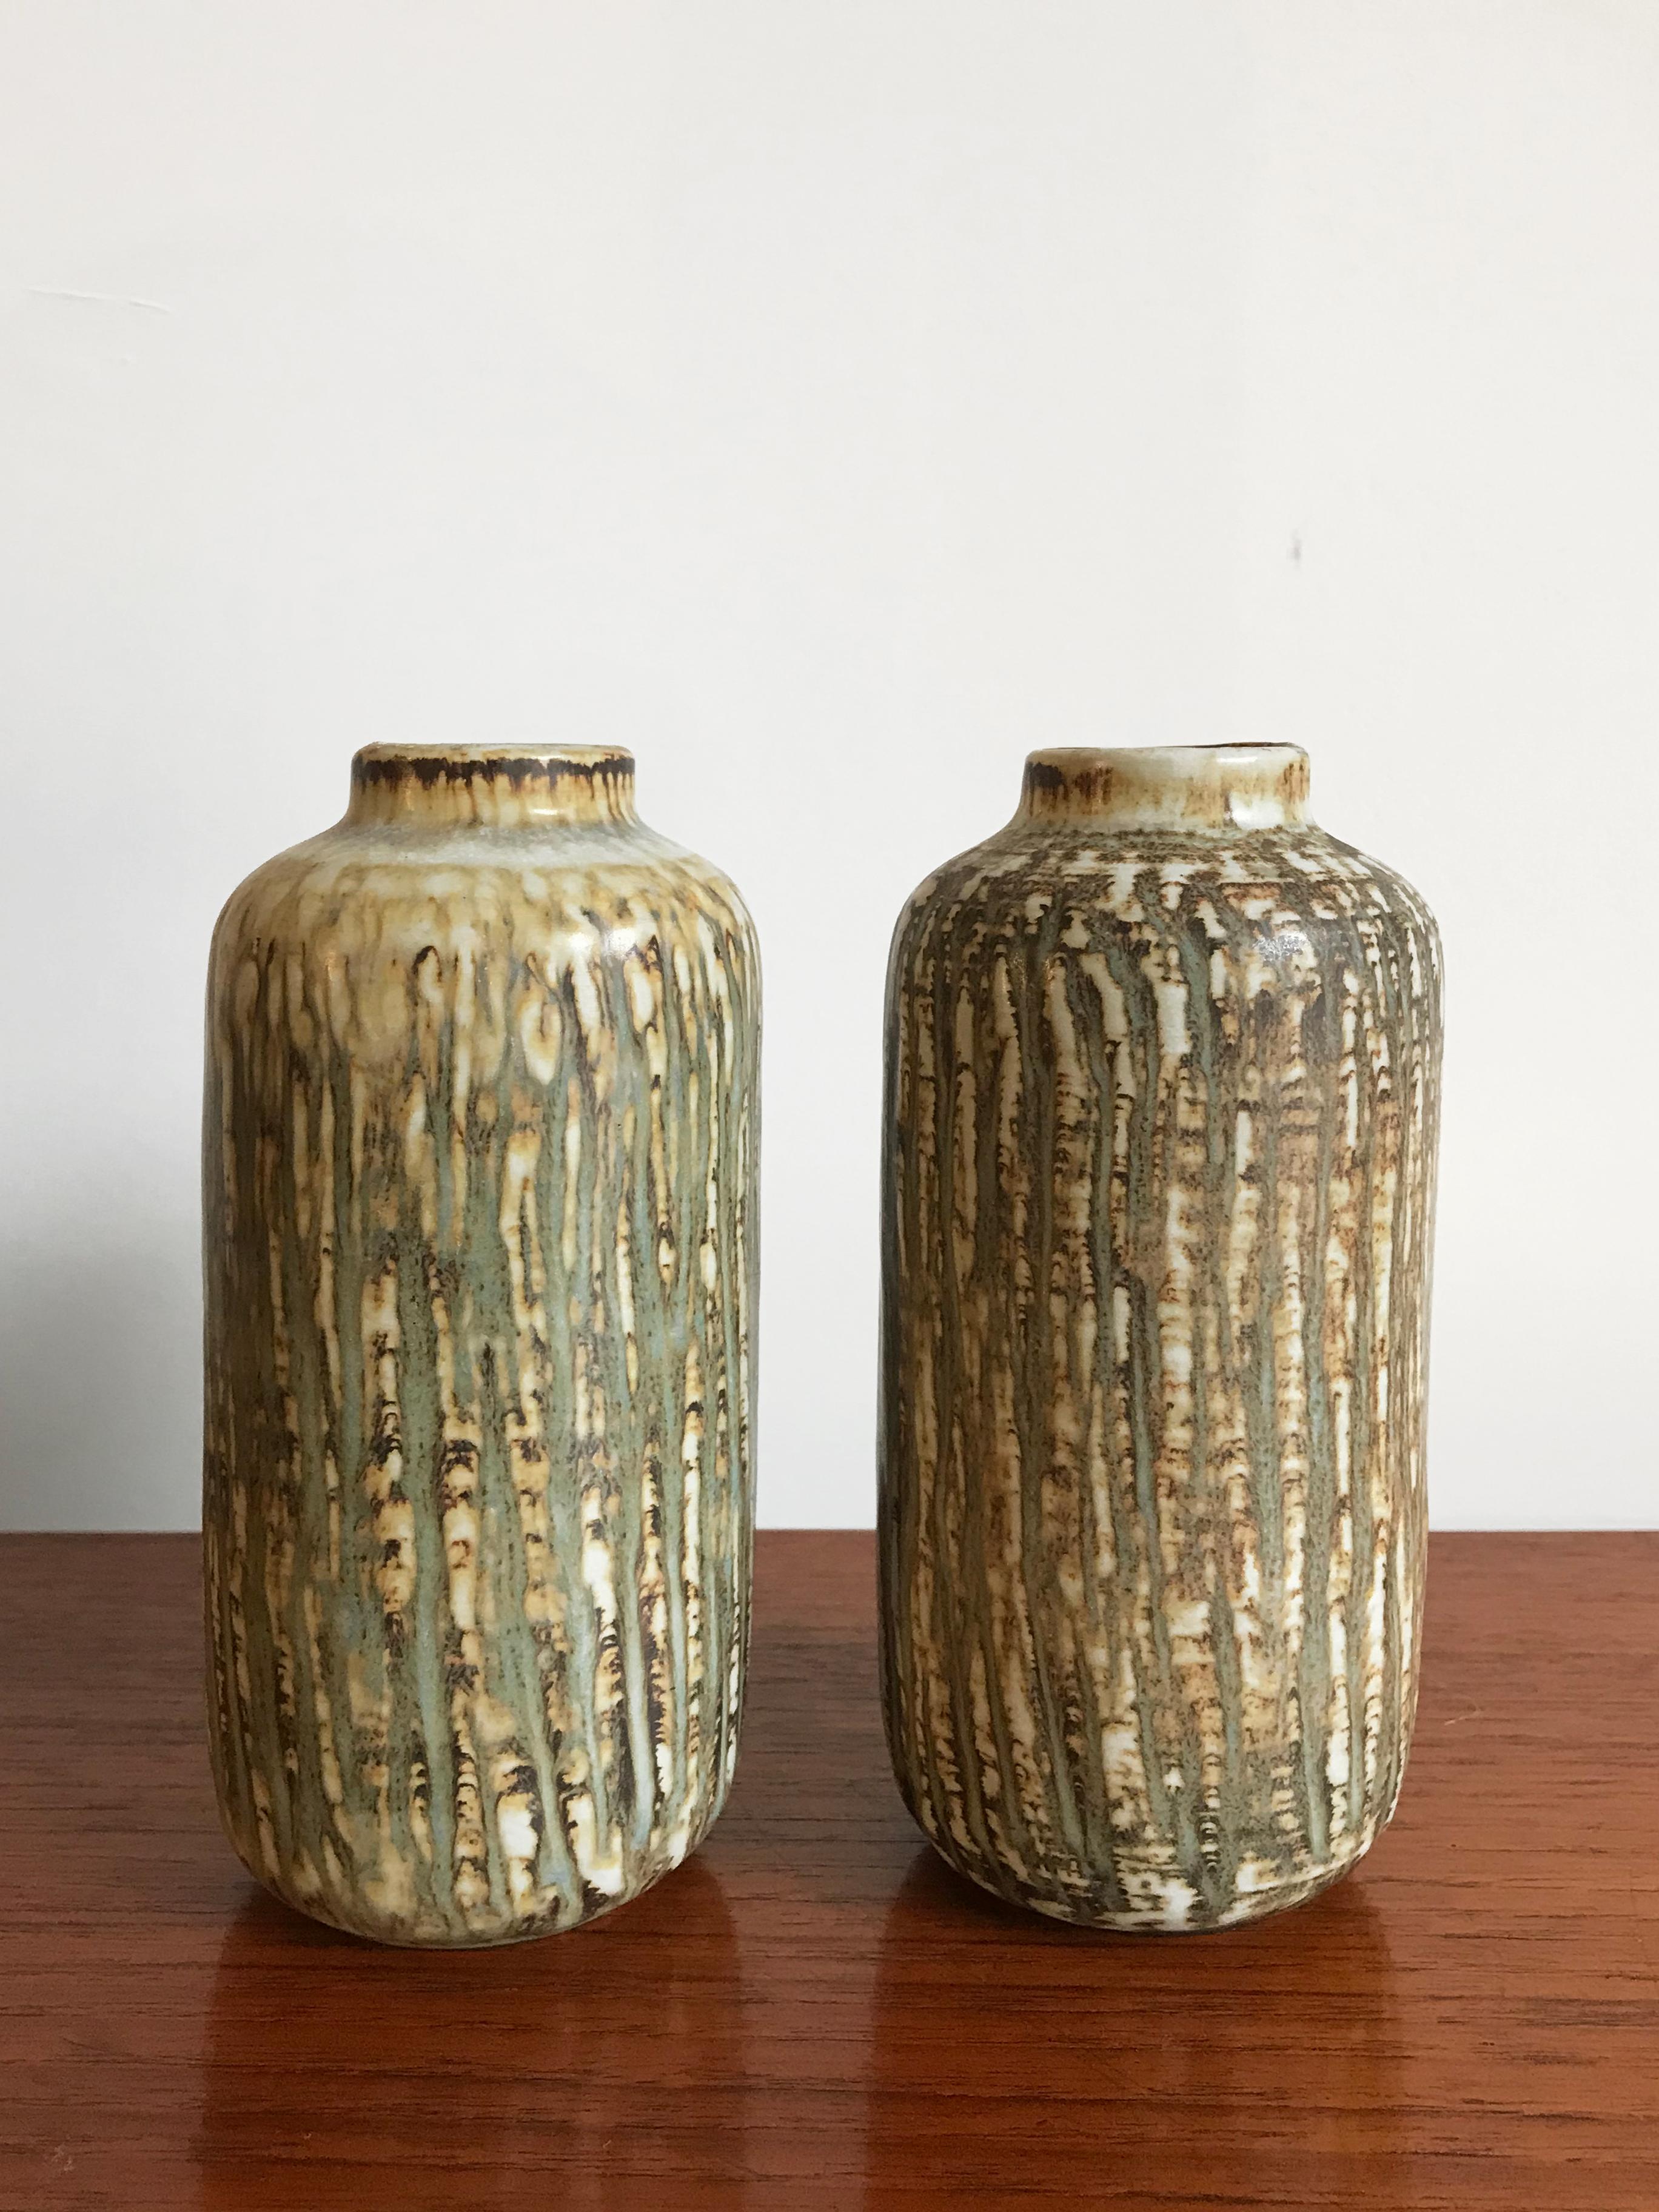 Scandinavian Mid-Century Modern design ceramic vases set designed by Gunnar Nylund for Rörstrand, made in Sweden, marked on the bottom, in matte enamel, 19650s.
Dimensions: Height 17 cm, diameter 6 cm.